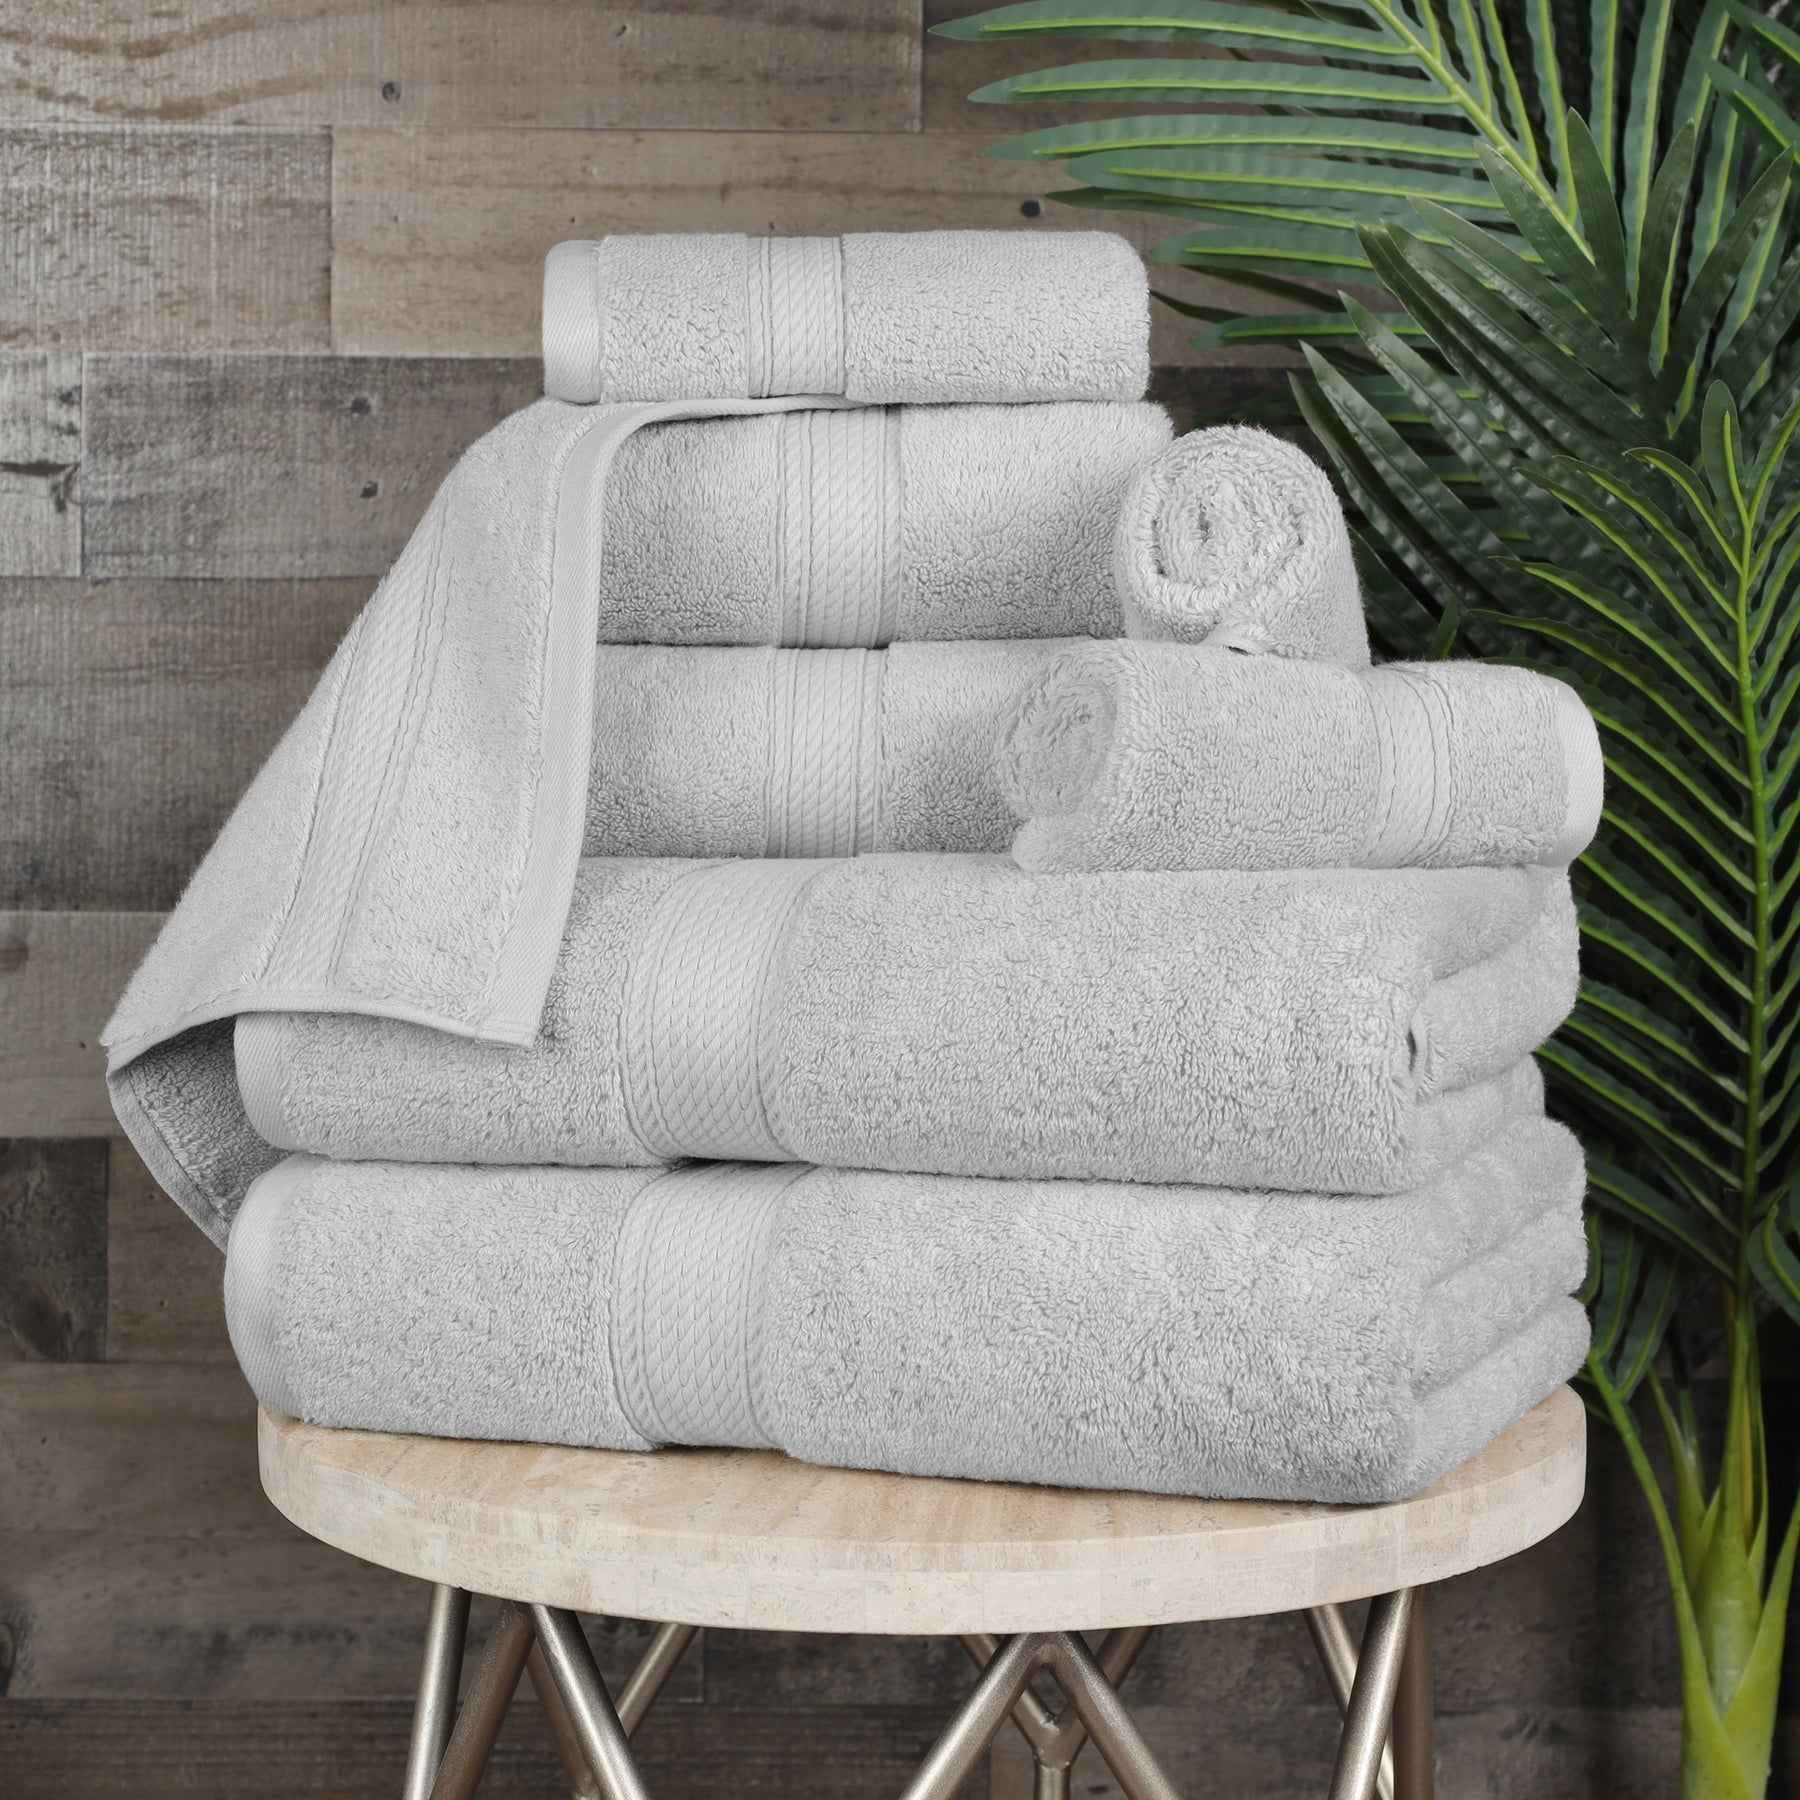 ClearloveWL Bath towel, 100% Egyptian cotton Towel set bath towel